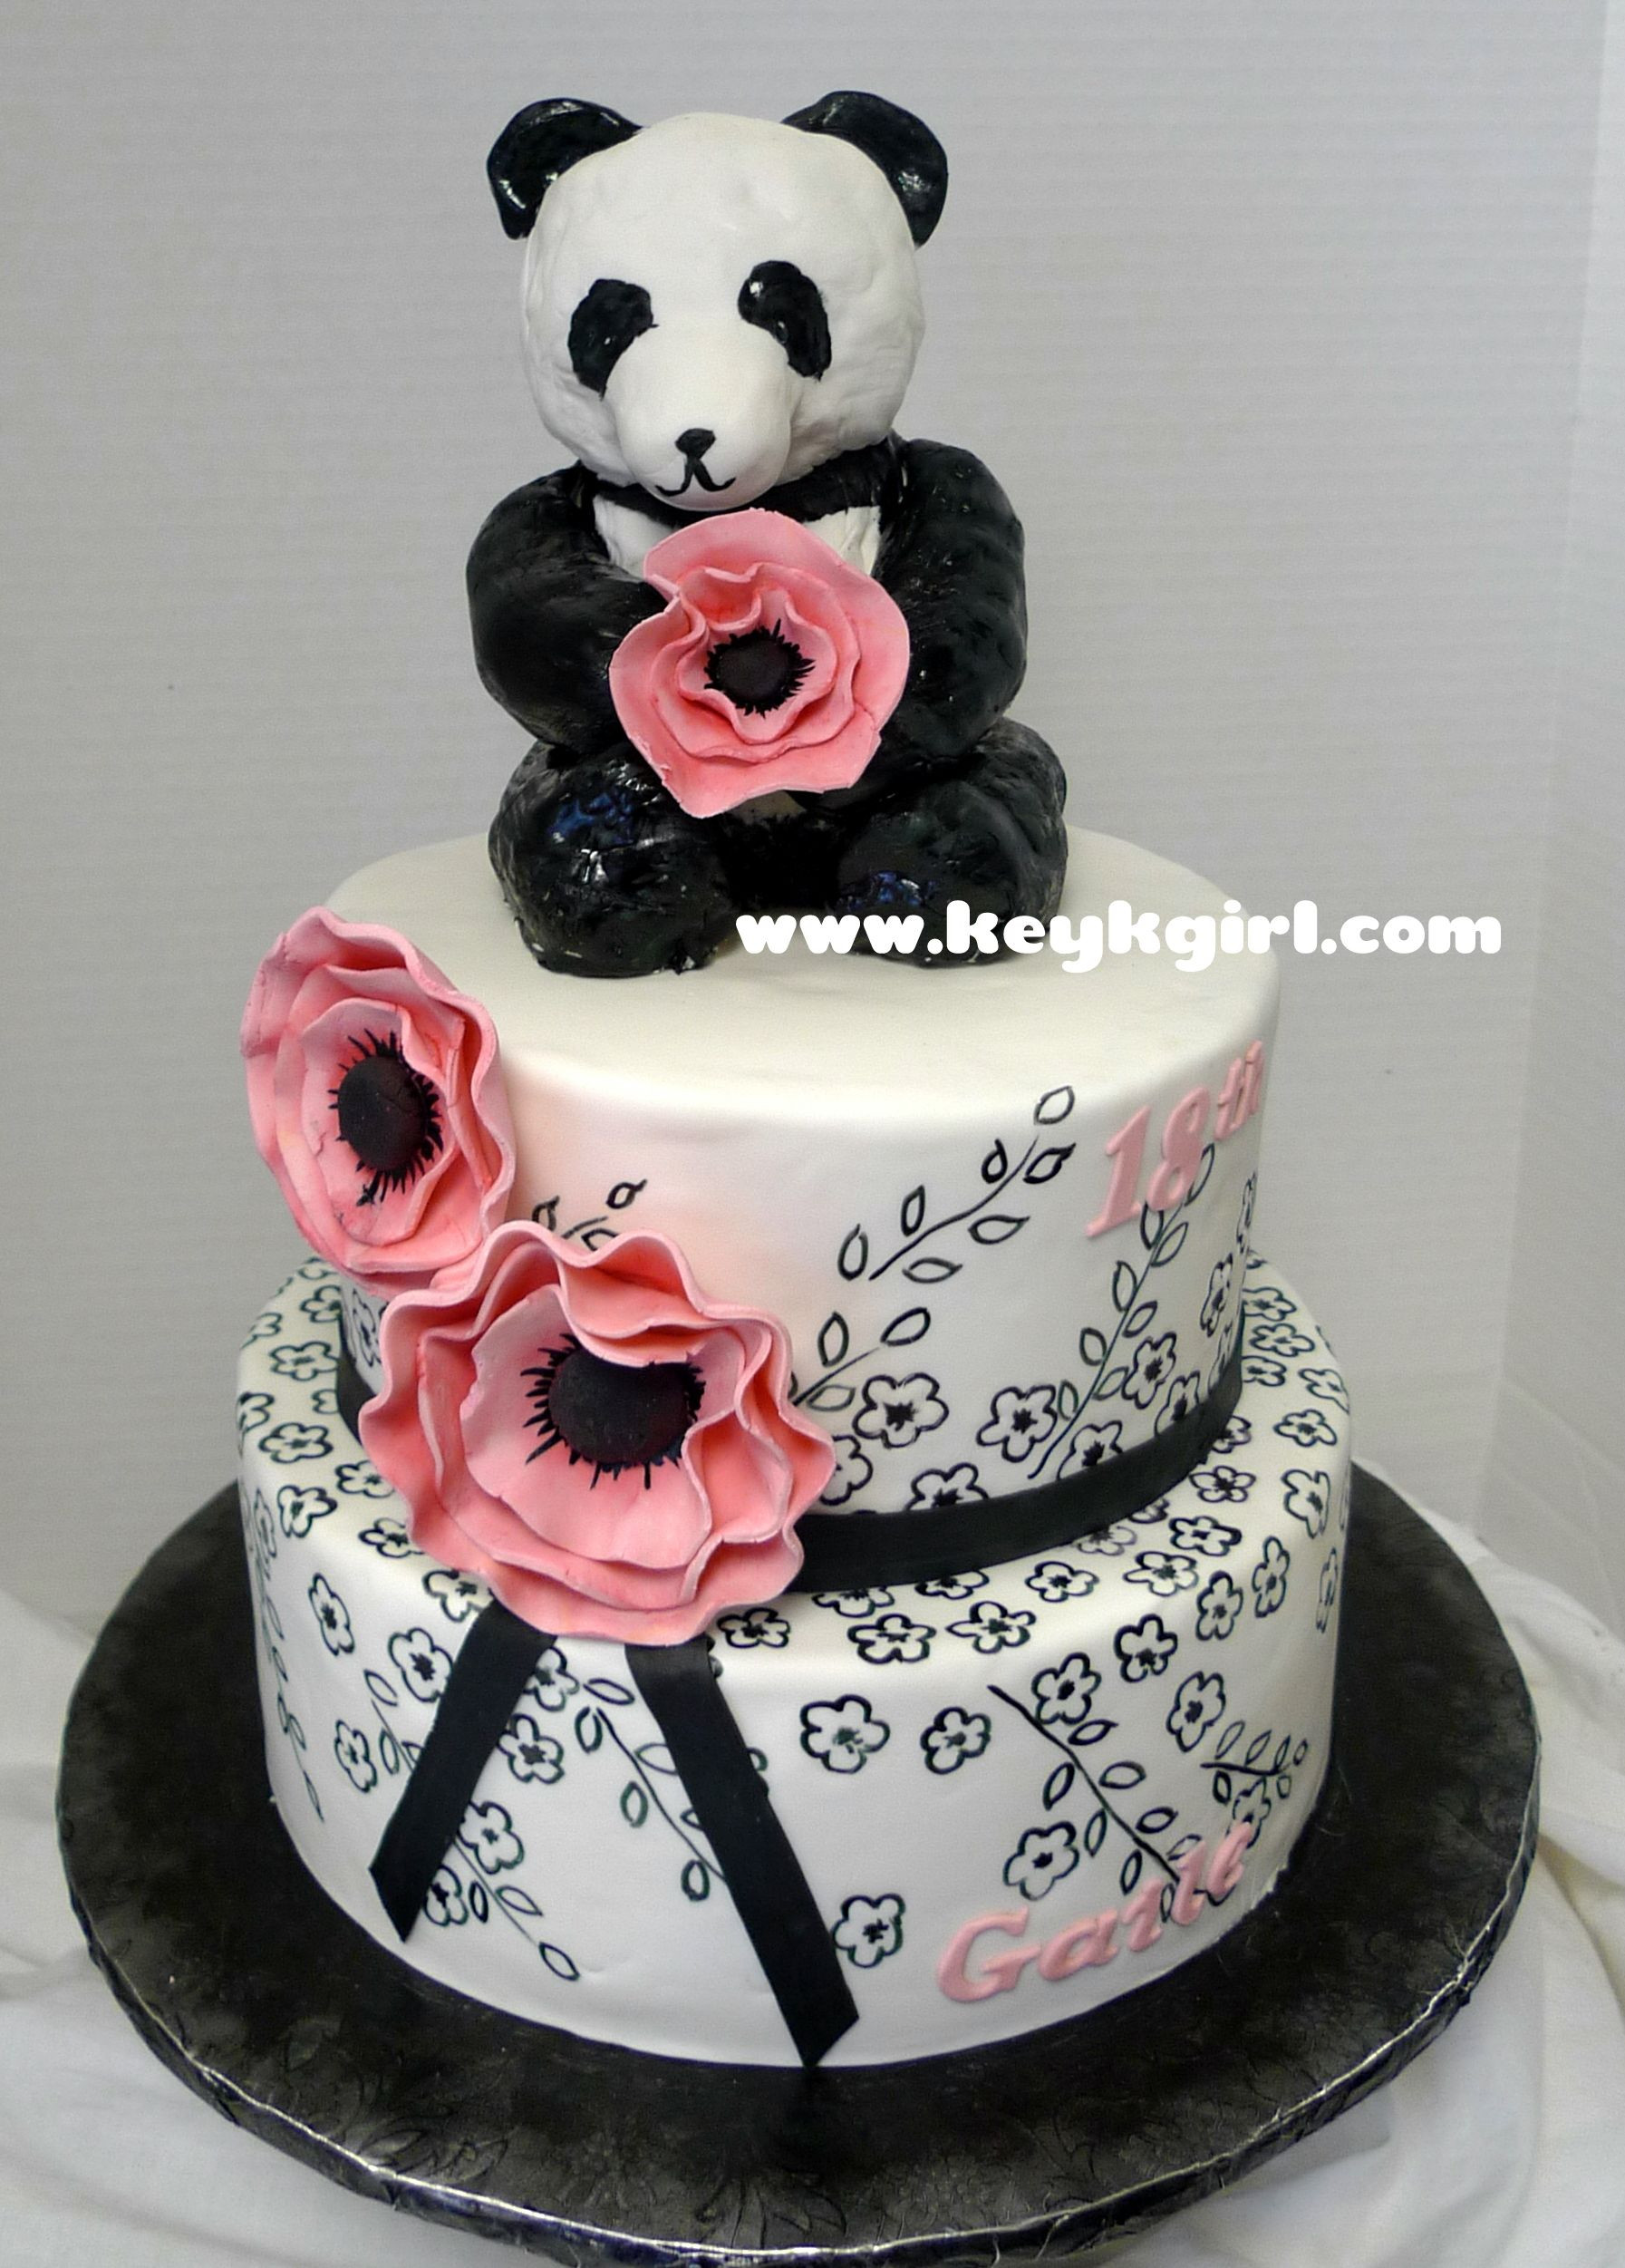 Best ideas about Panda Birthday Cake
. Save or Pin panda cake love Cake Pinterest Now.